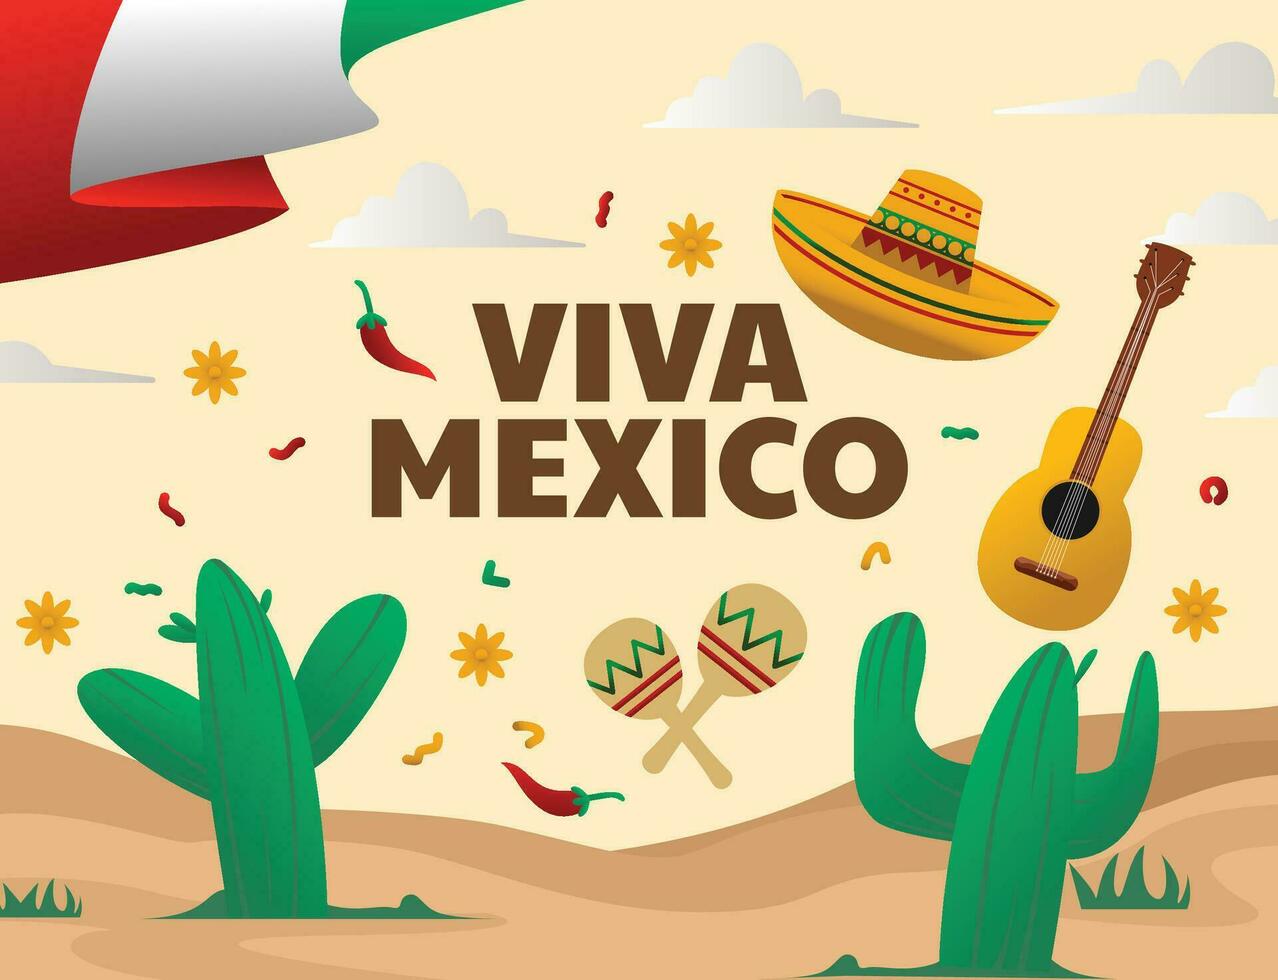 Viva Mexico event banner illustration design vector